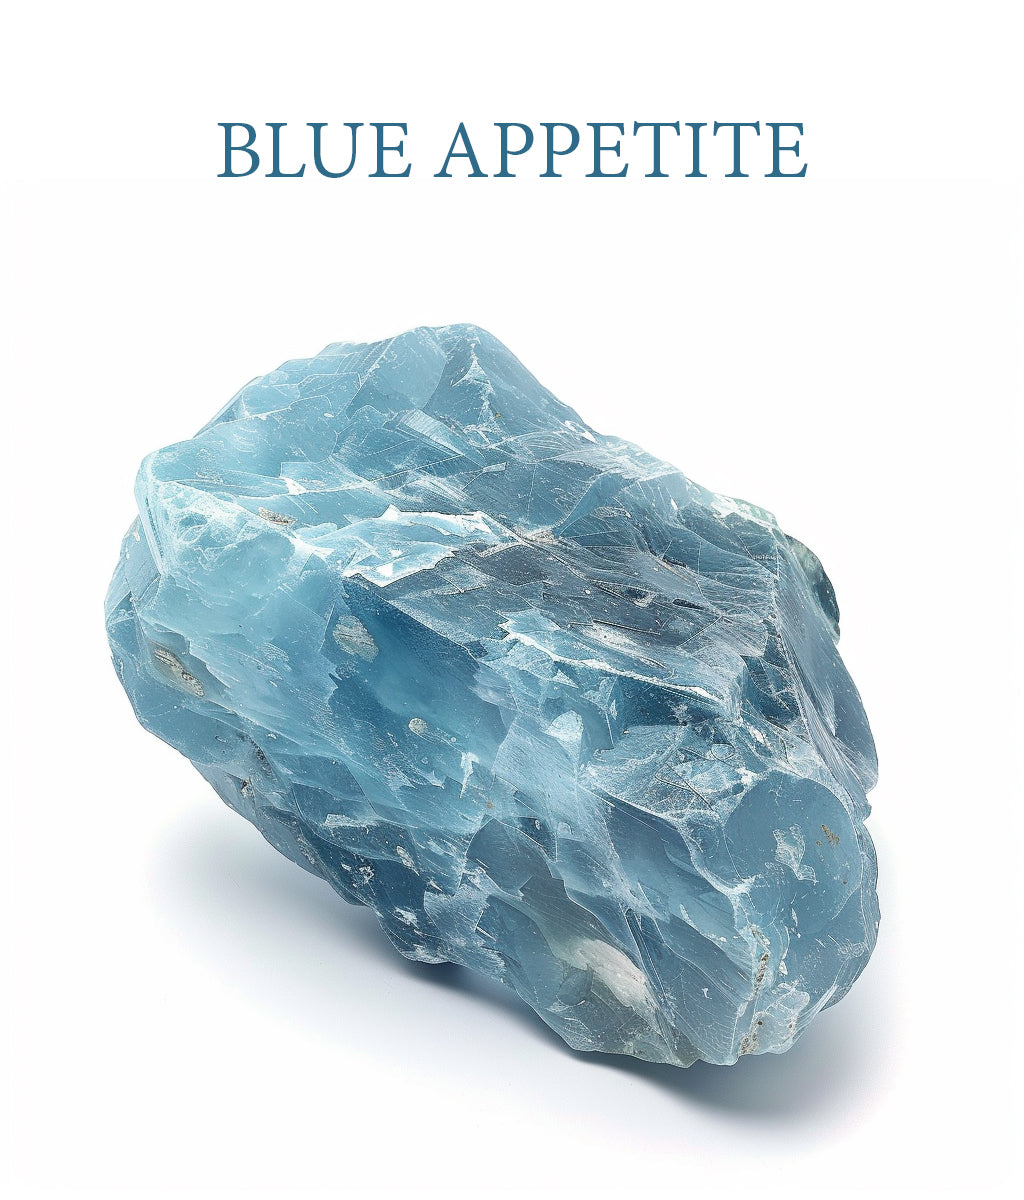 Blueappetite